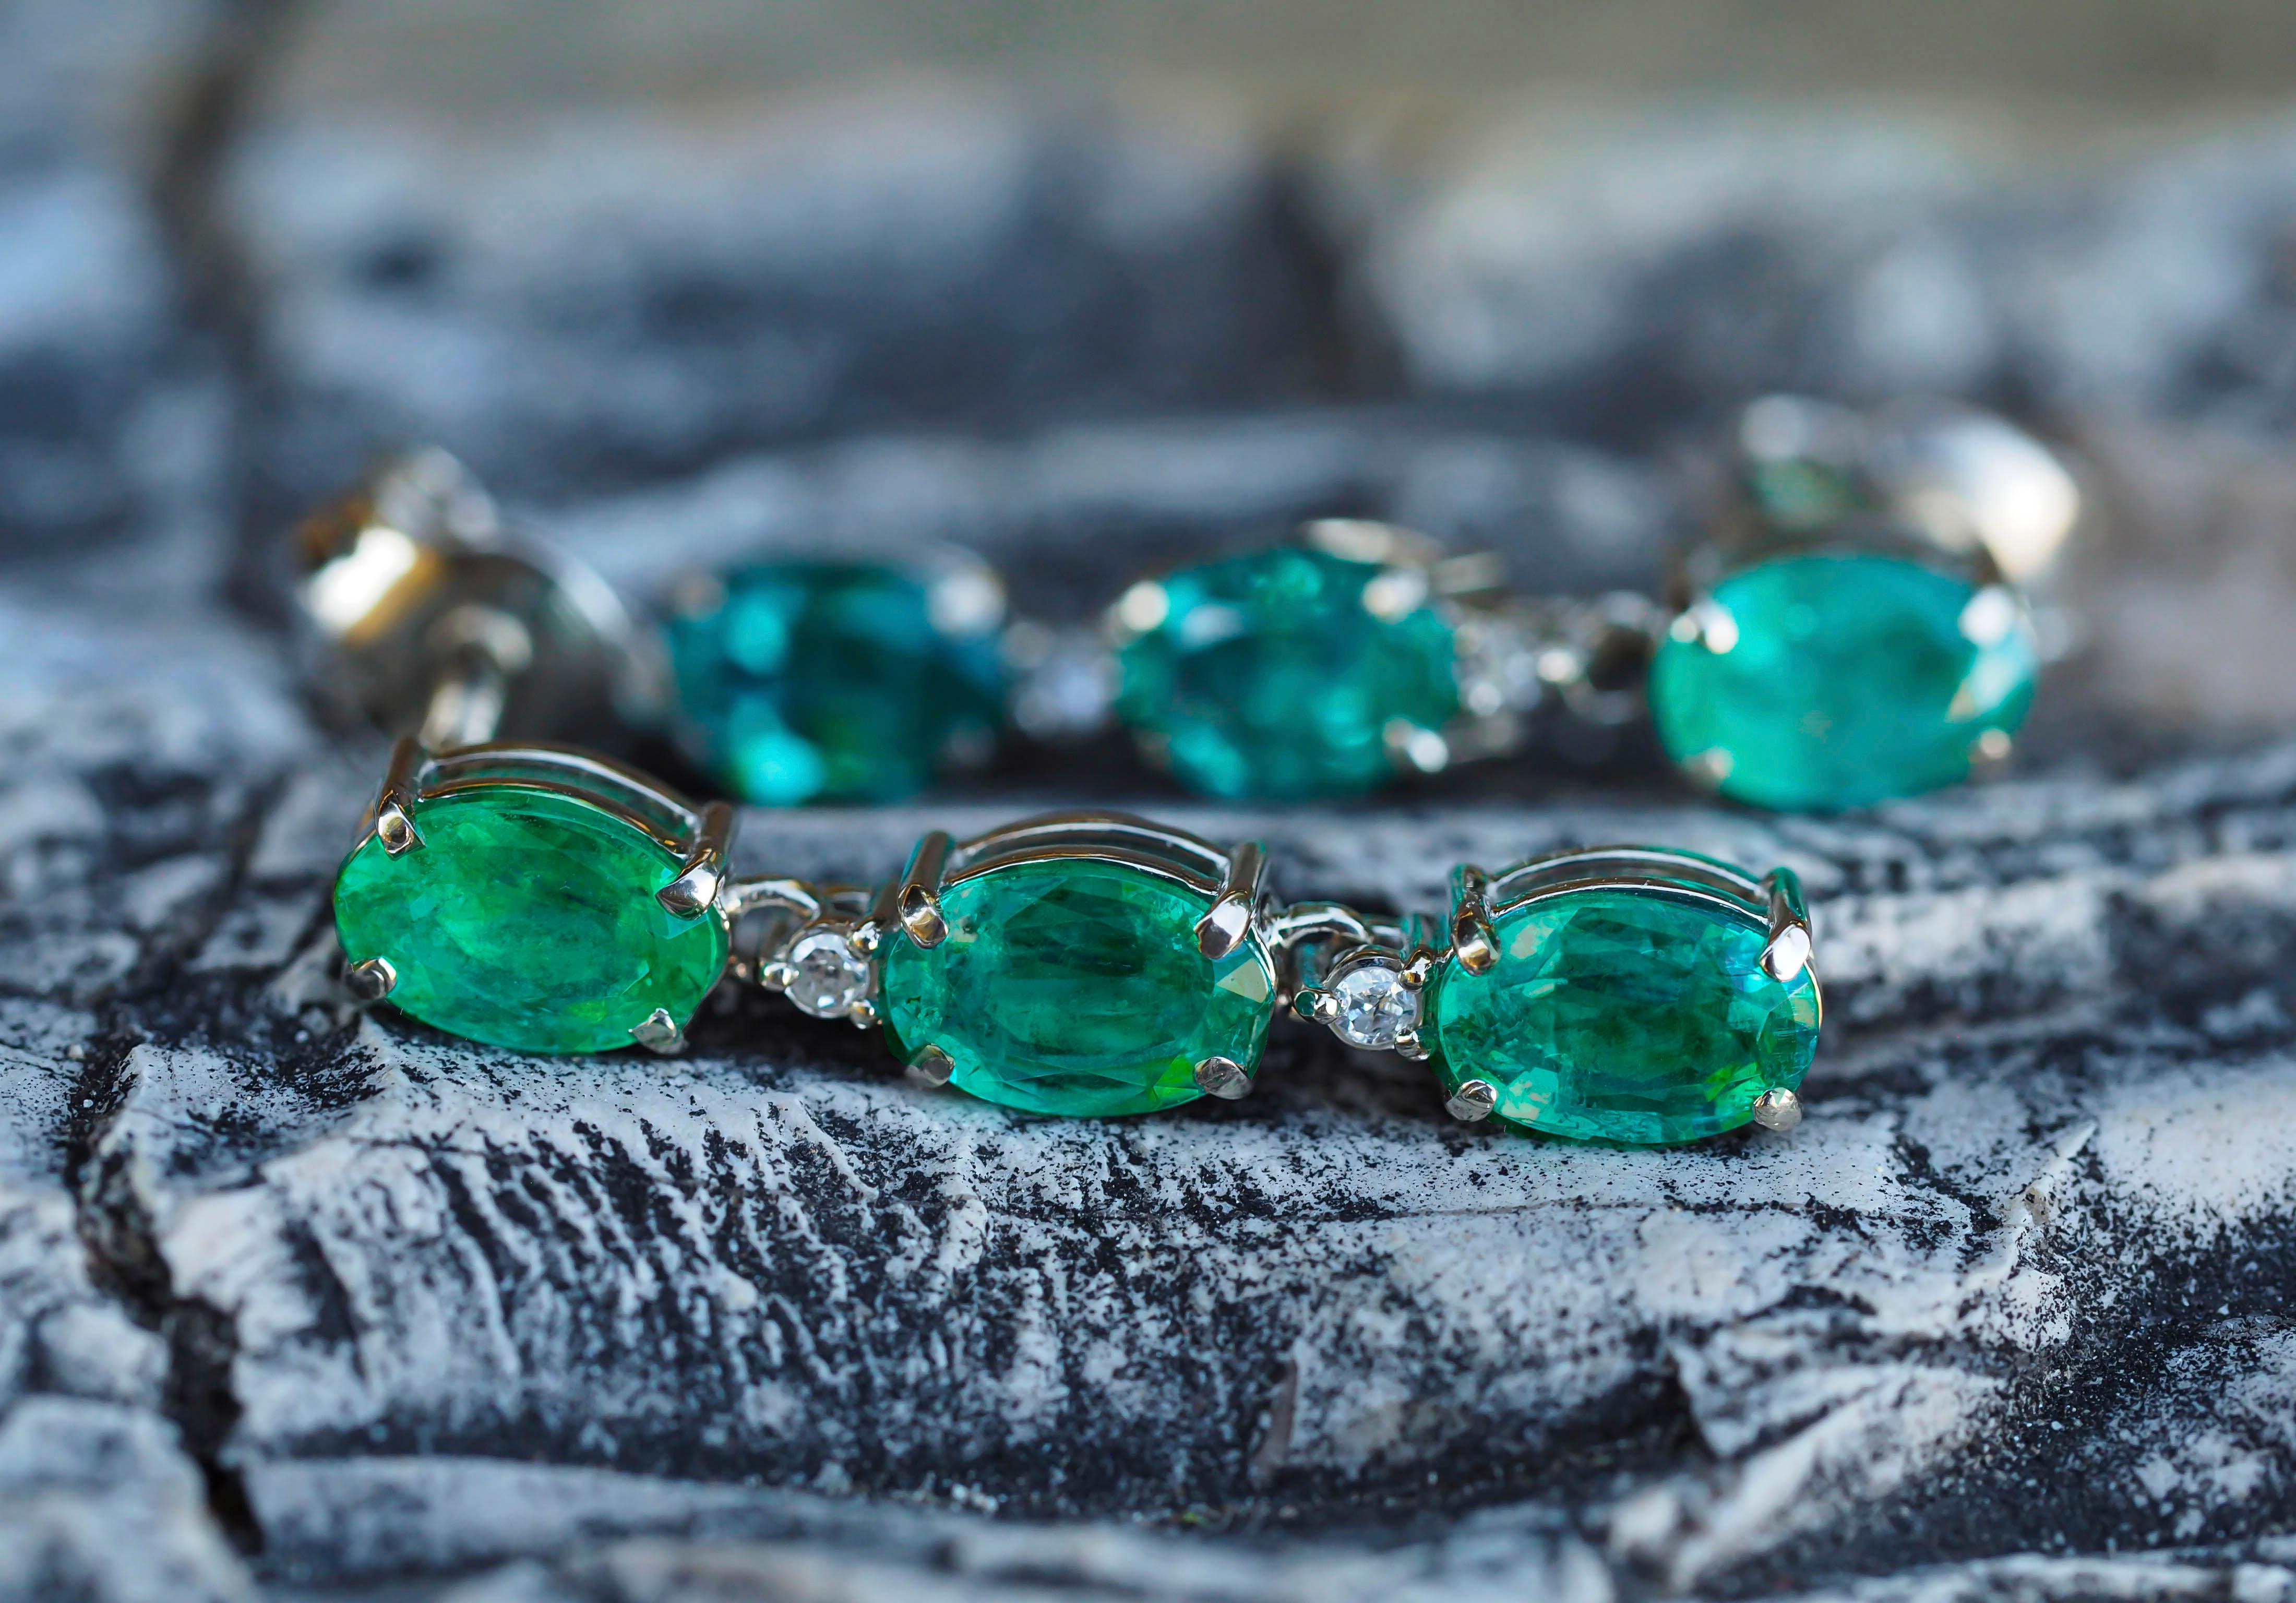 Oval emeralds 14k gold earrings studs. 
Emerald Drop earrings. Oval emerald earrings studs. Statement emerald earrings. May birthstone.

Metal: 14k gold.
Earrings size: 23.7x5.4 mm.
Weight: 2.4 gr.

Gemstones:
Emeralds: 4 pieces, oval cut, green